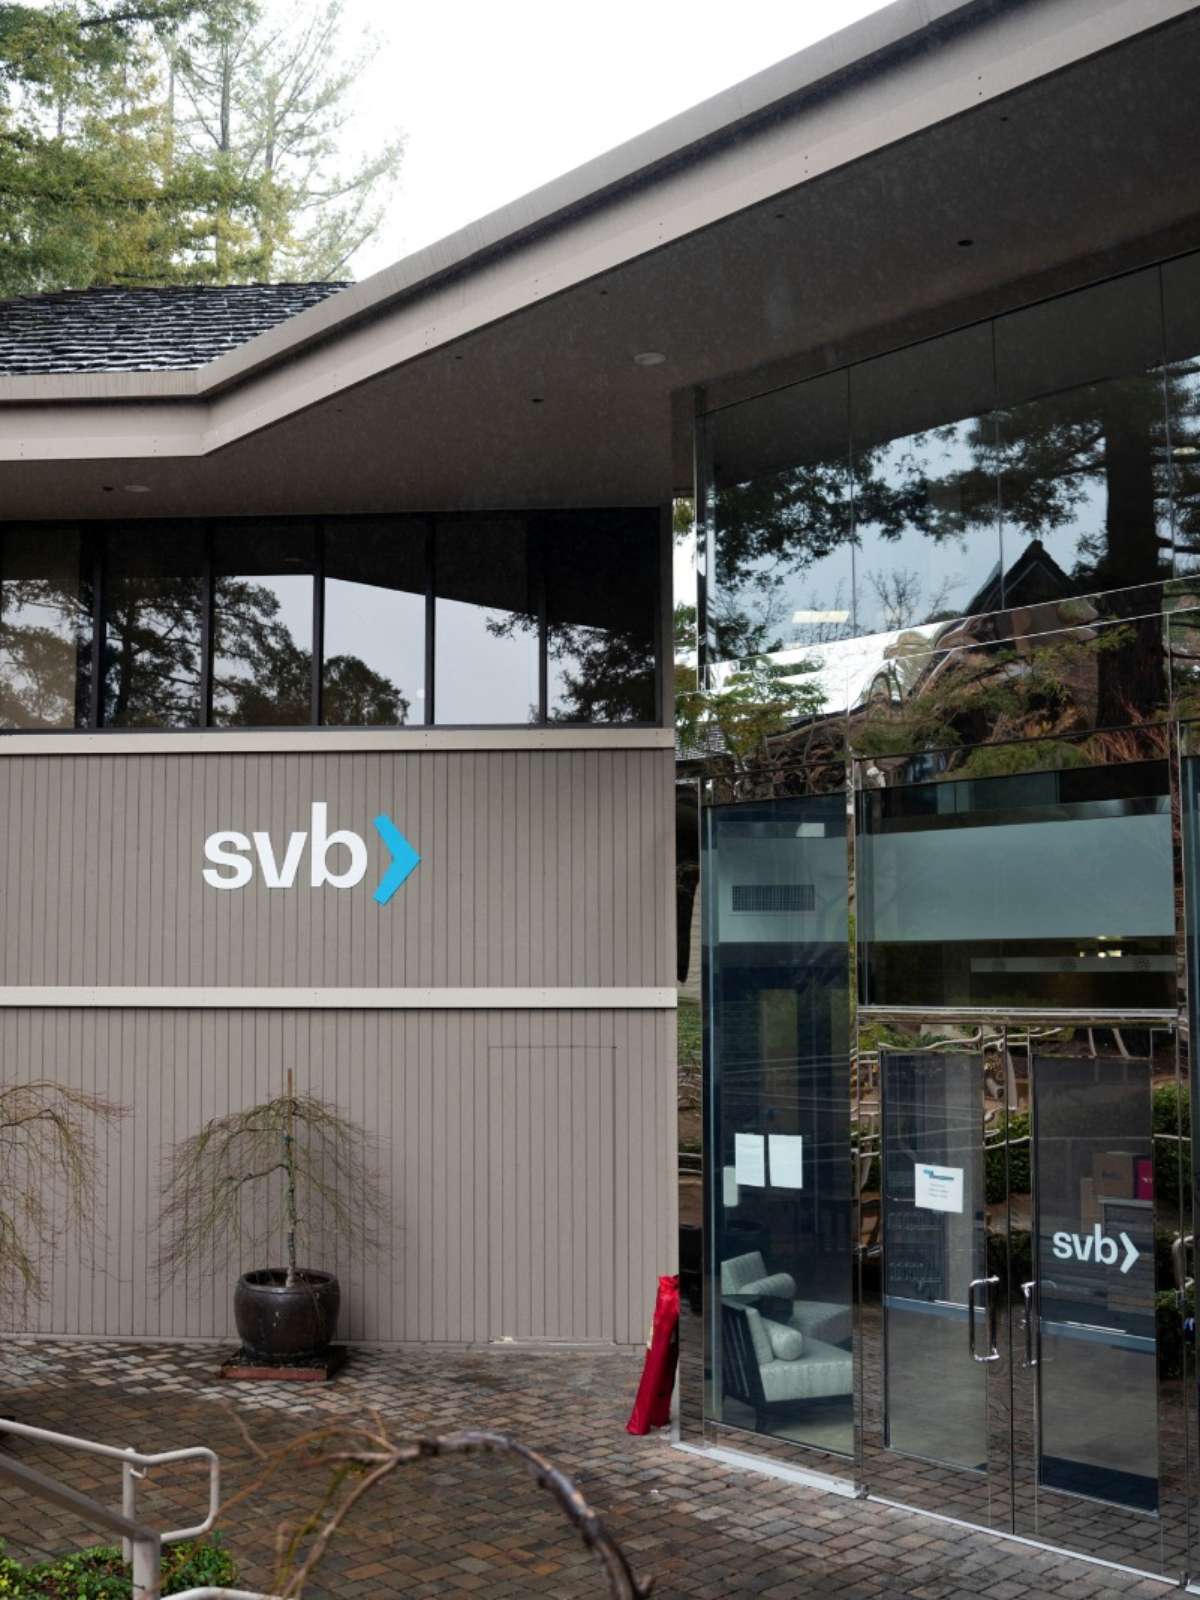 EUA fecham Signature Bank, dois dias após falência do Silicon Valley Bank, Economia